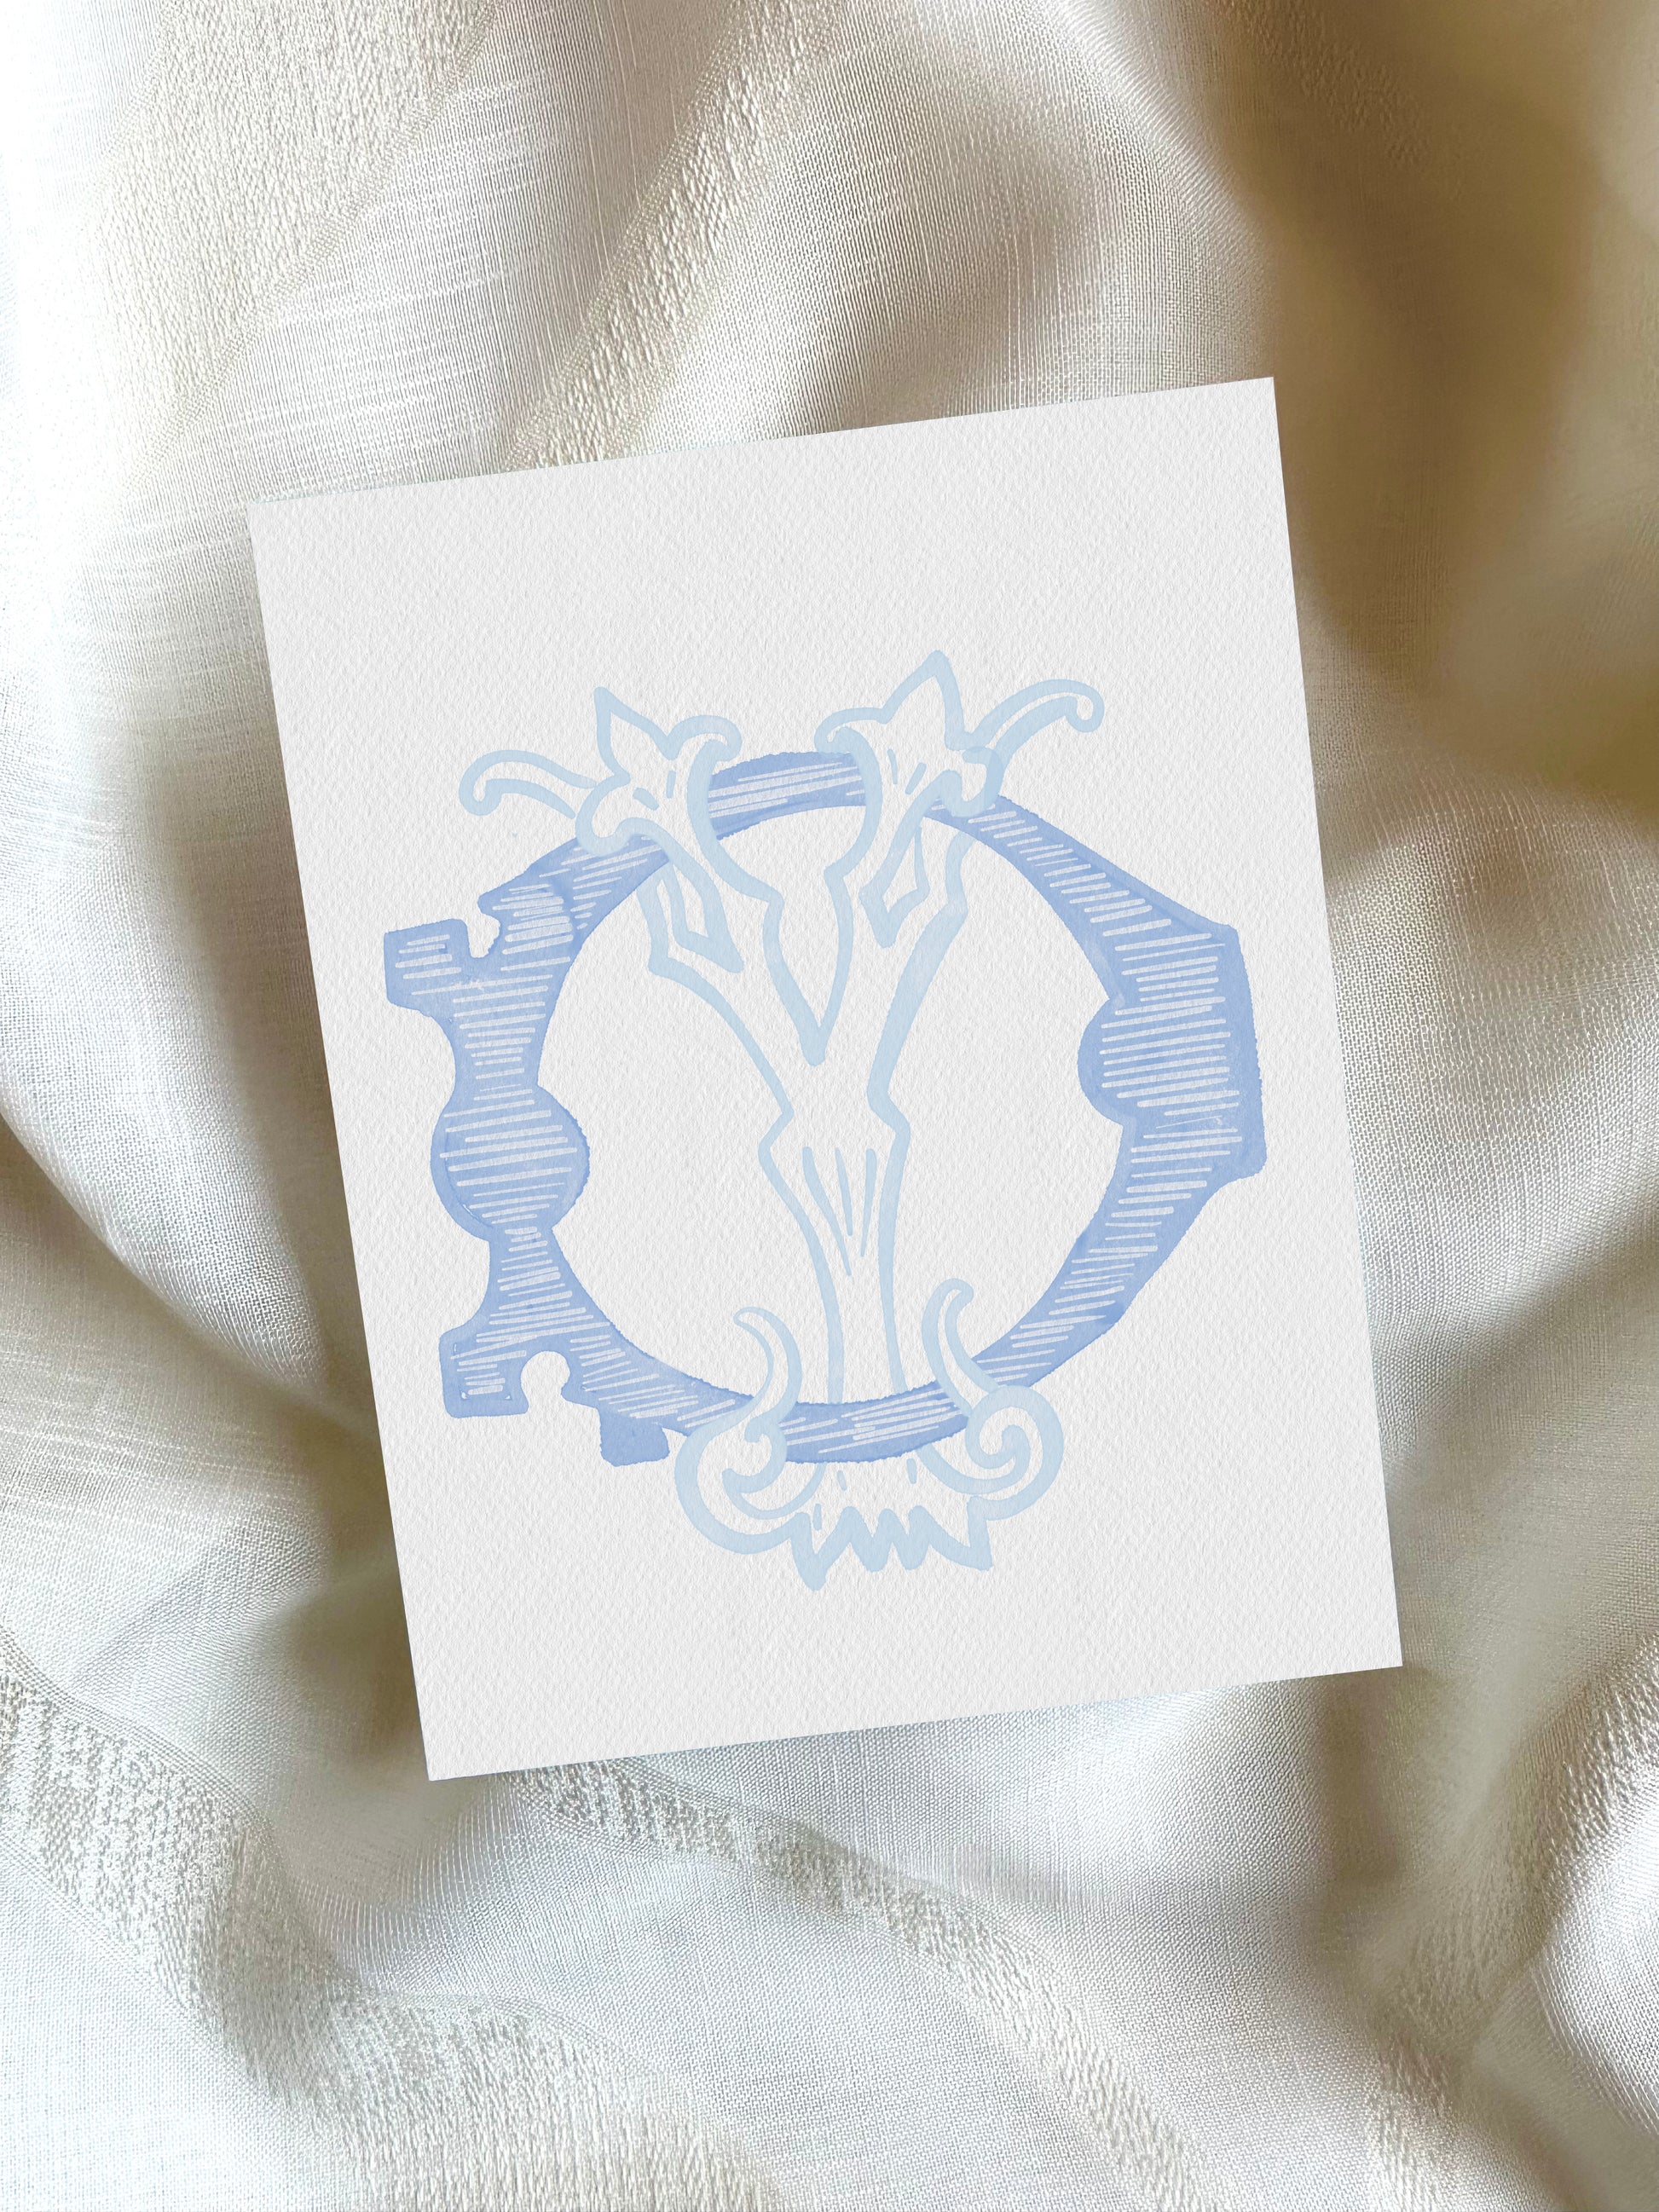 2 Letter Monogram with Letters DY YD | Digital Download - Wedding Monogram SVG, Personal Logo, Wedding Logo for Wedding Invitations The Wedding Crest Lab